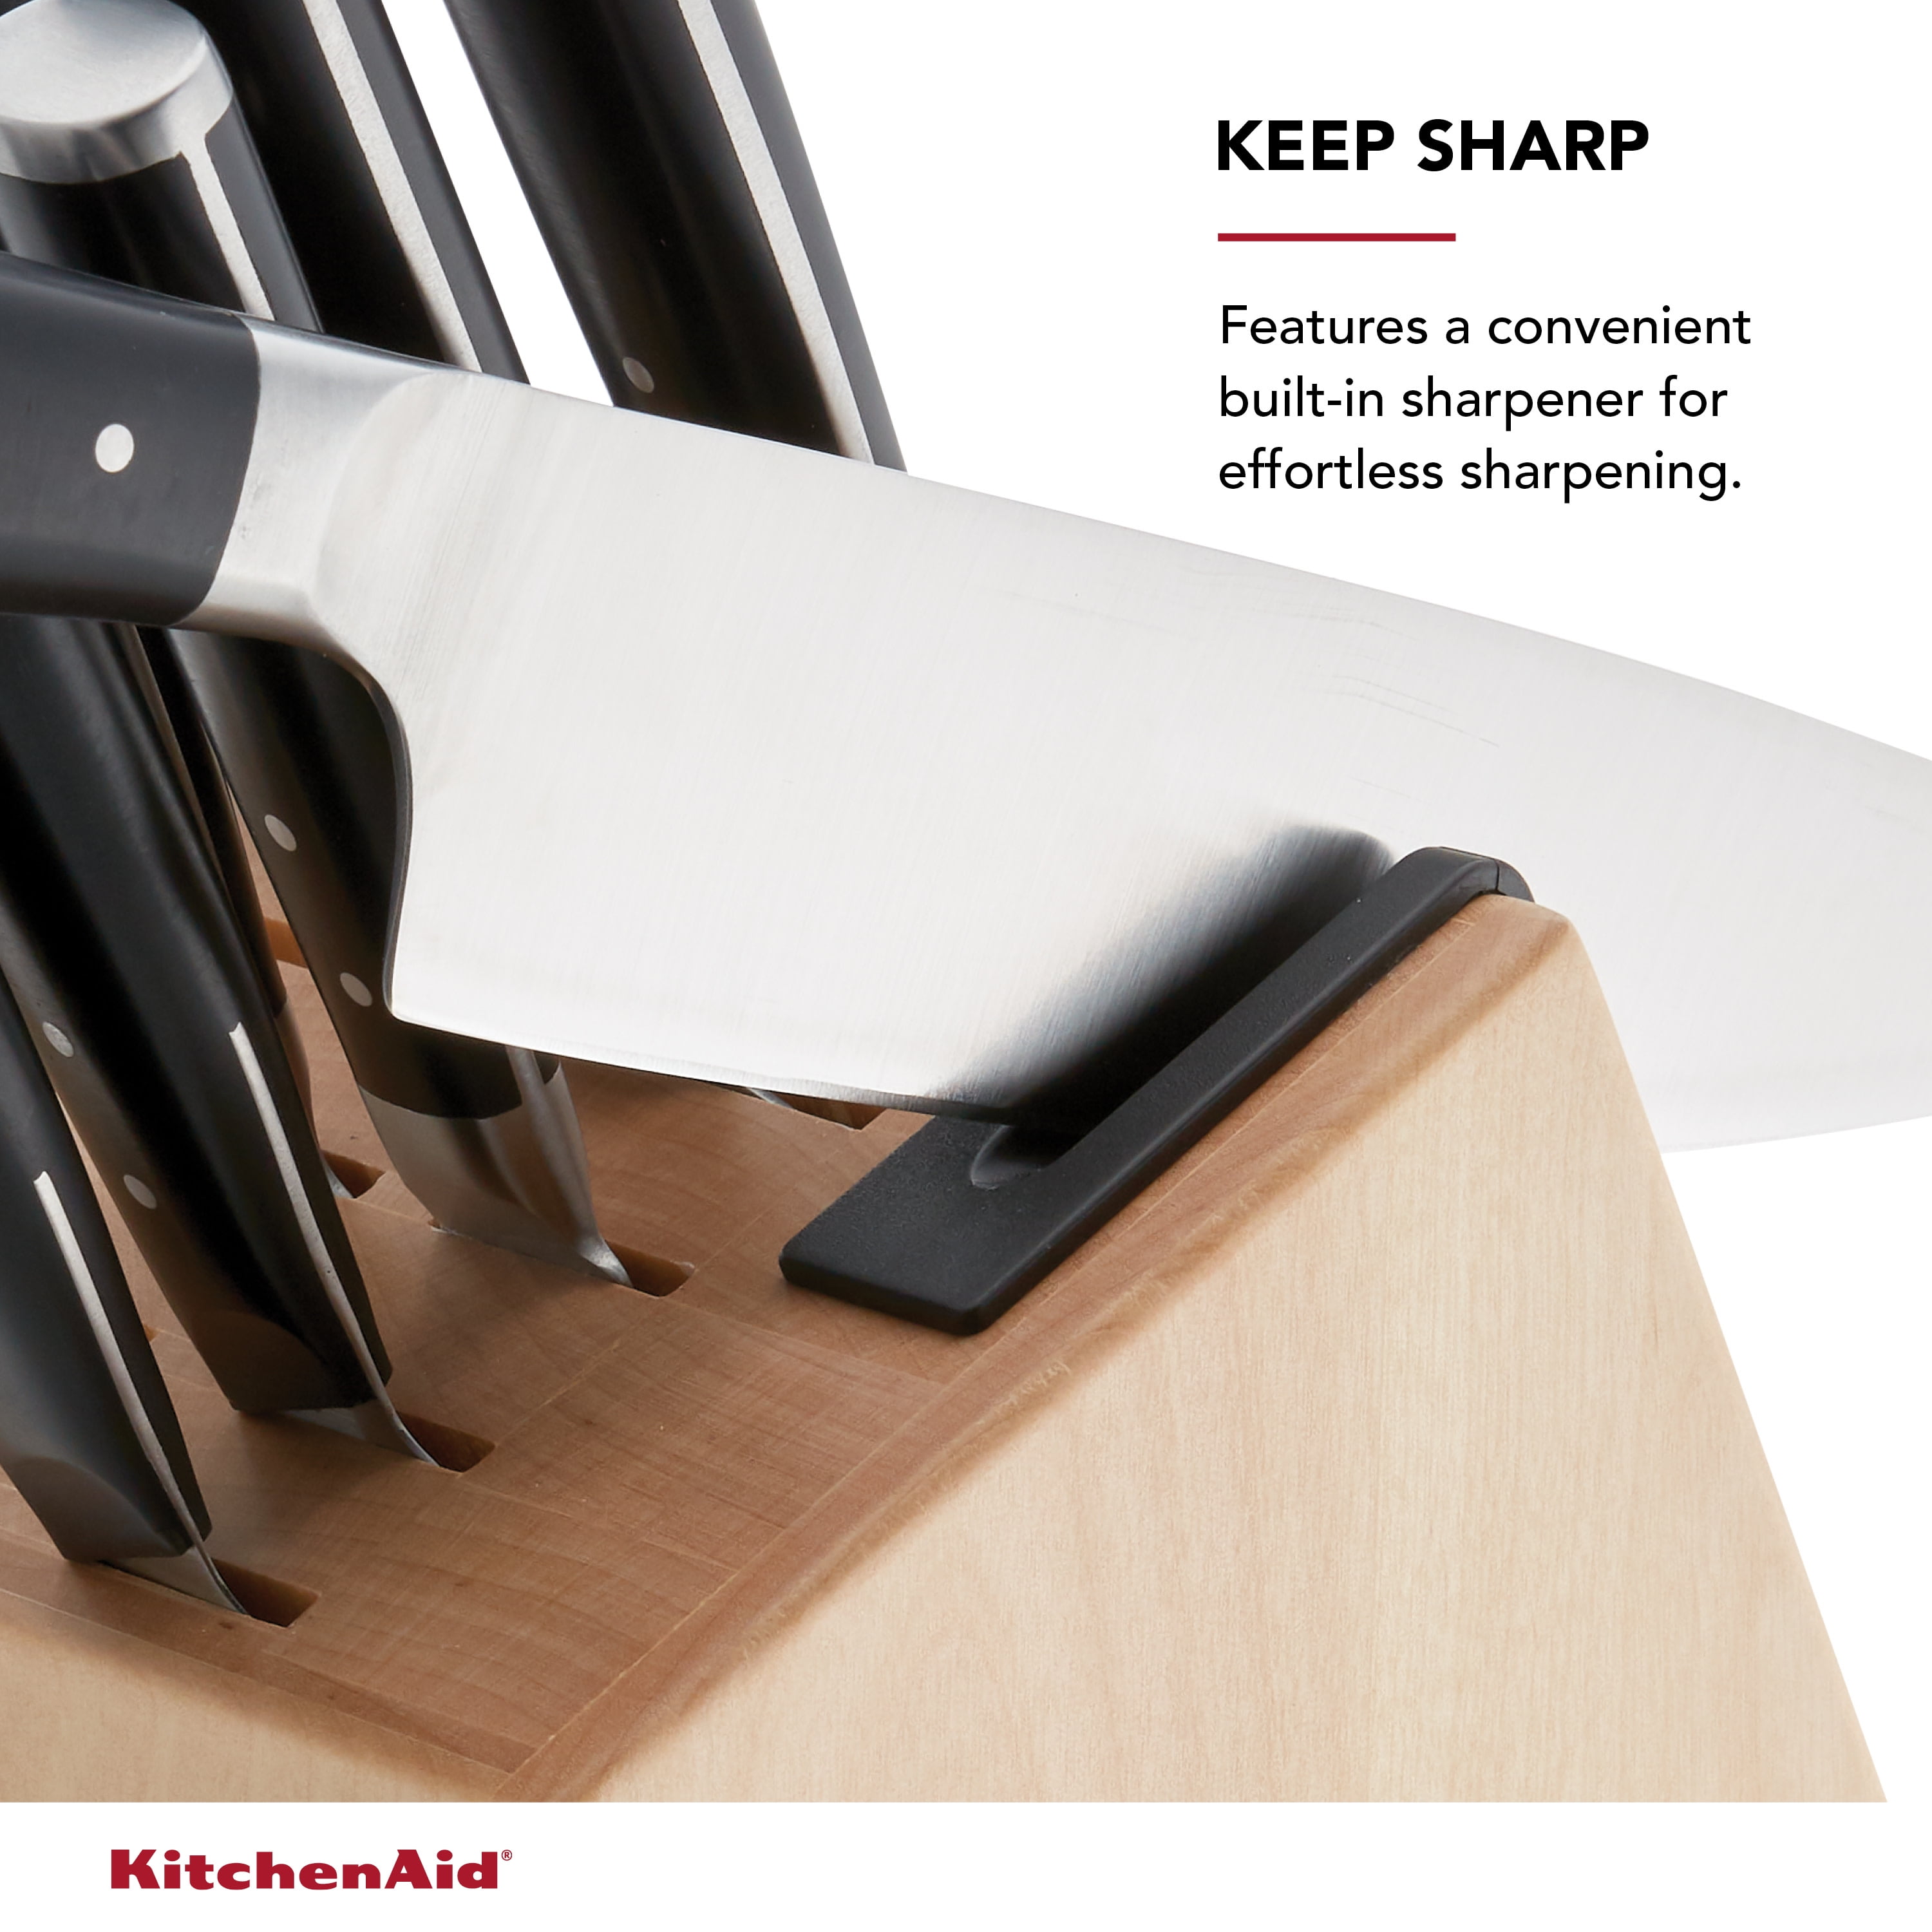 KitchenAid Knife Set, For Hotel/Restaurant